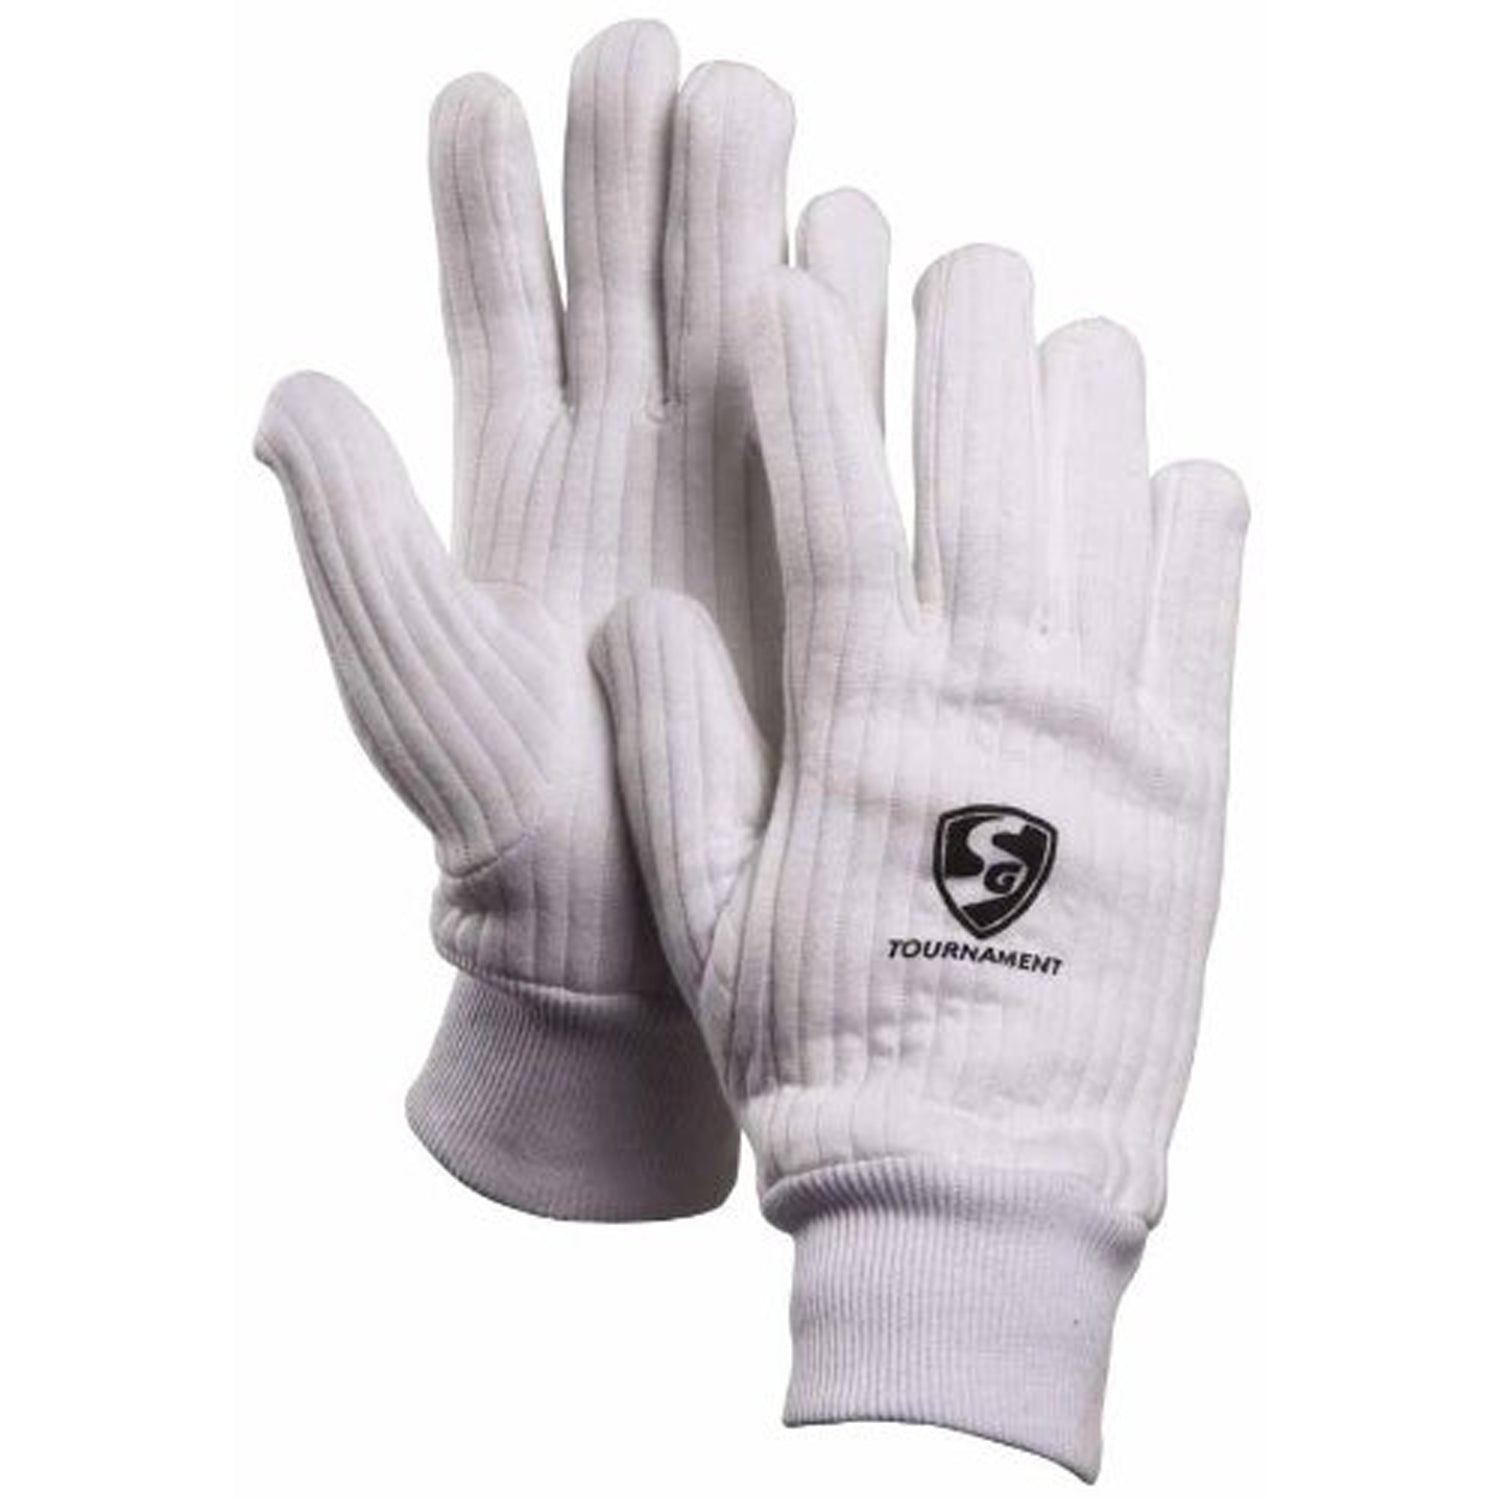 SG Tournament Inner Gloves, Adult - Best Price online Prokicksports.com